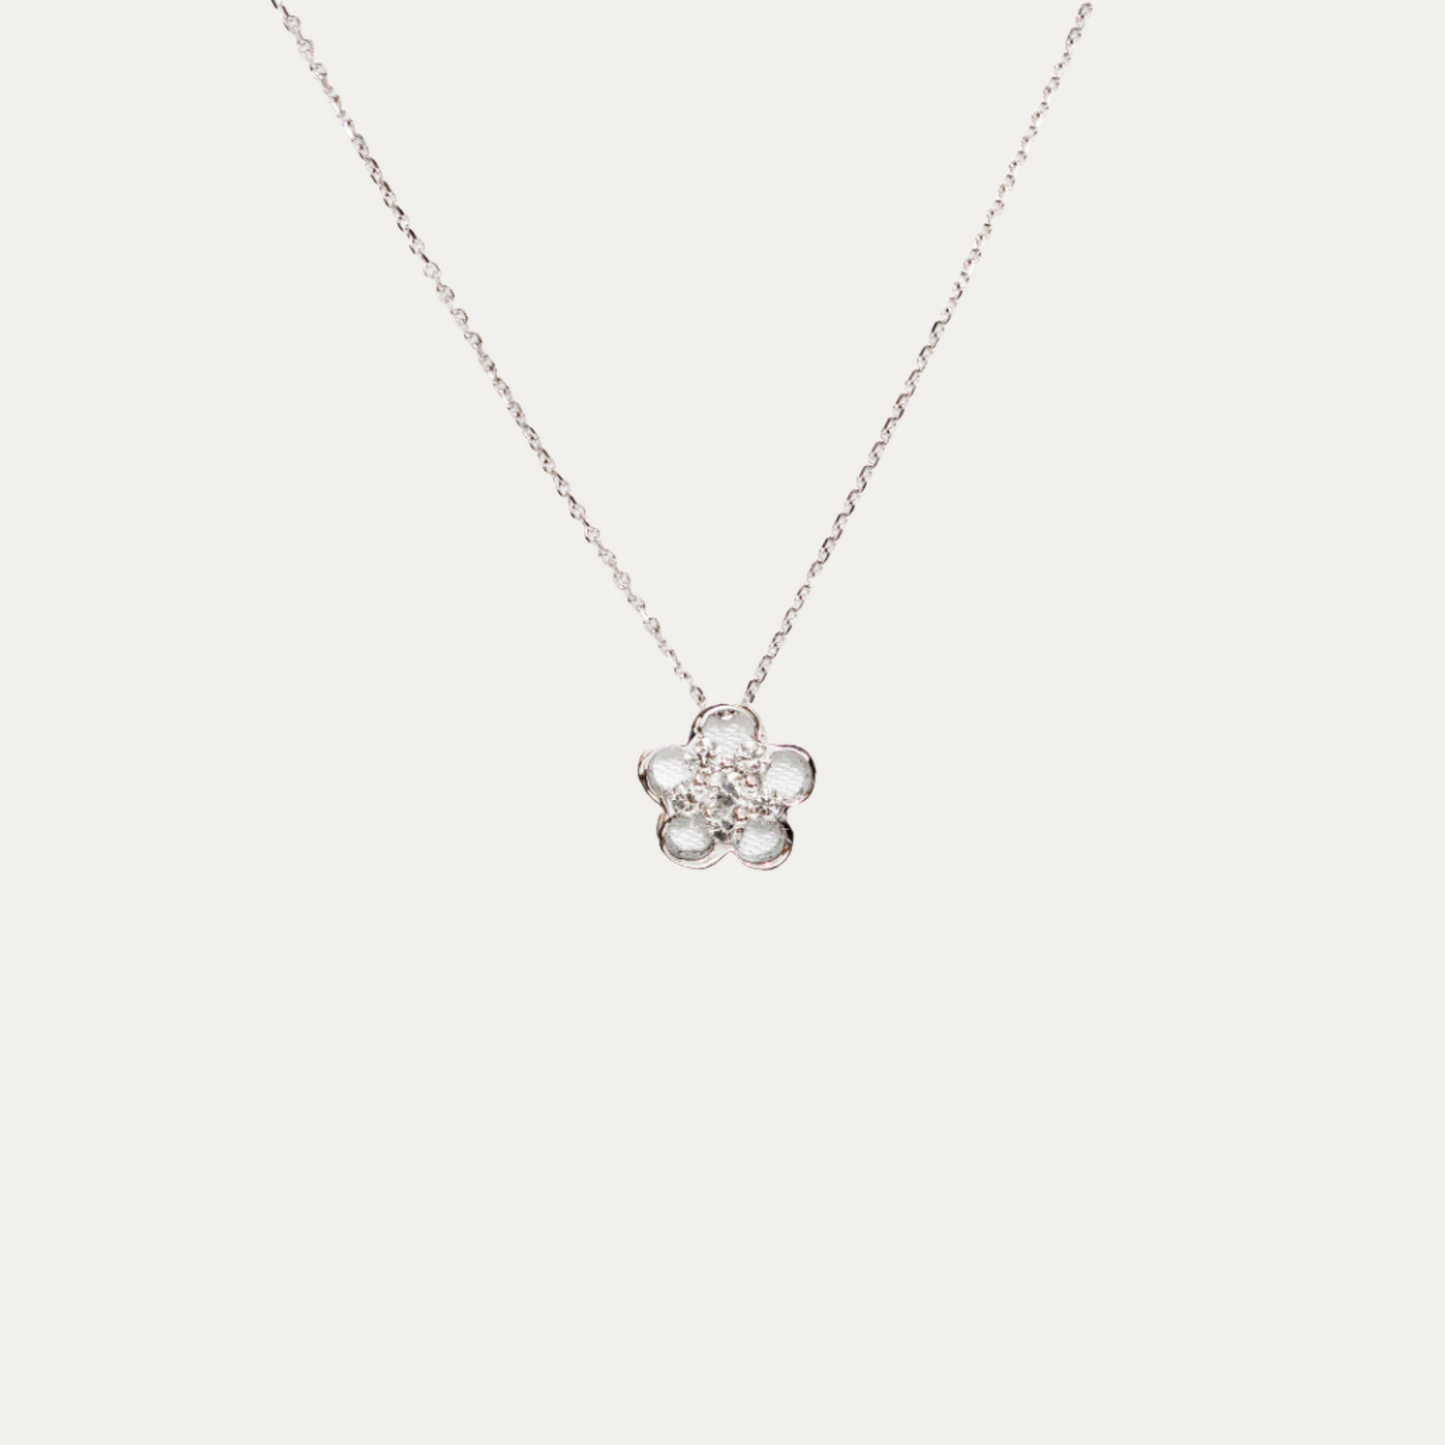 18k White Gold Flower Diamond Necklace